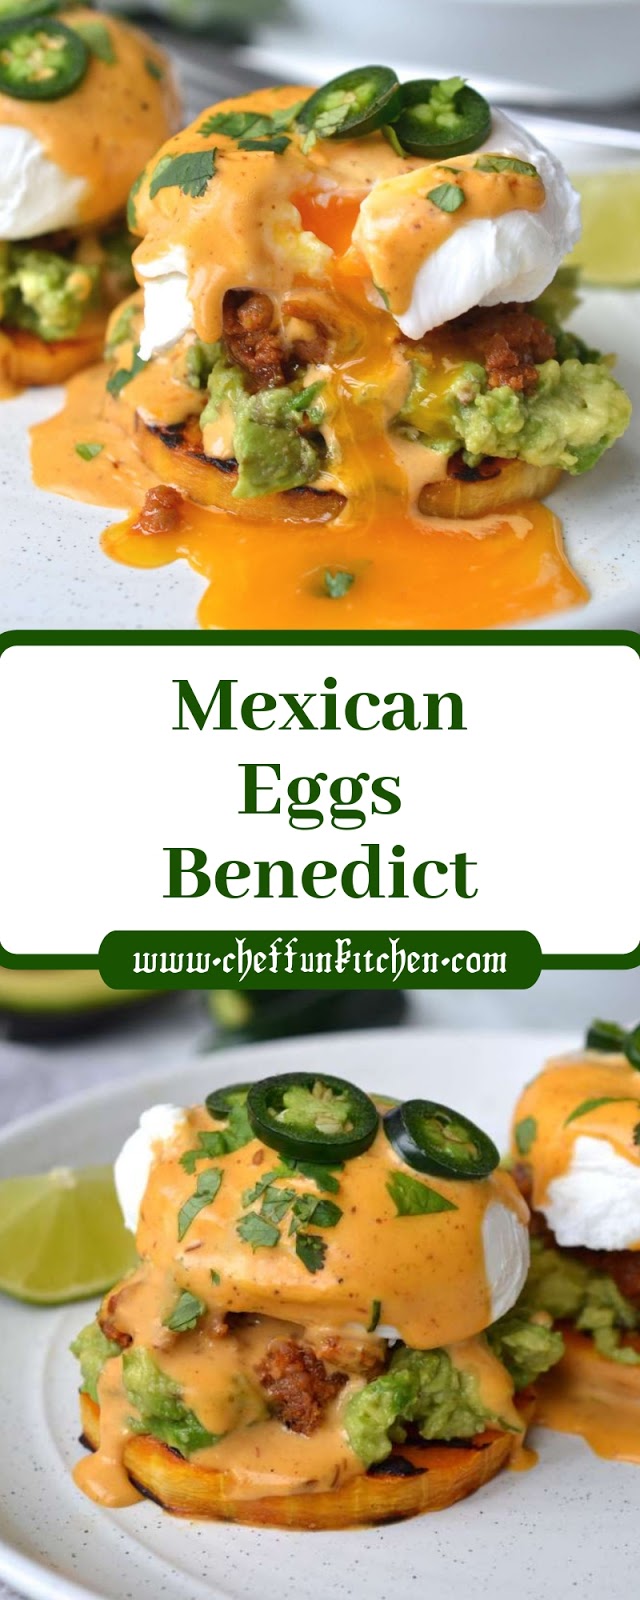 Mexican Eggs Benedict